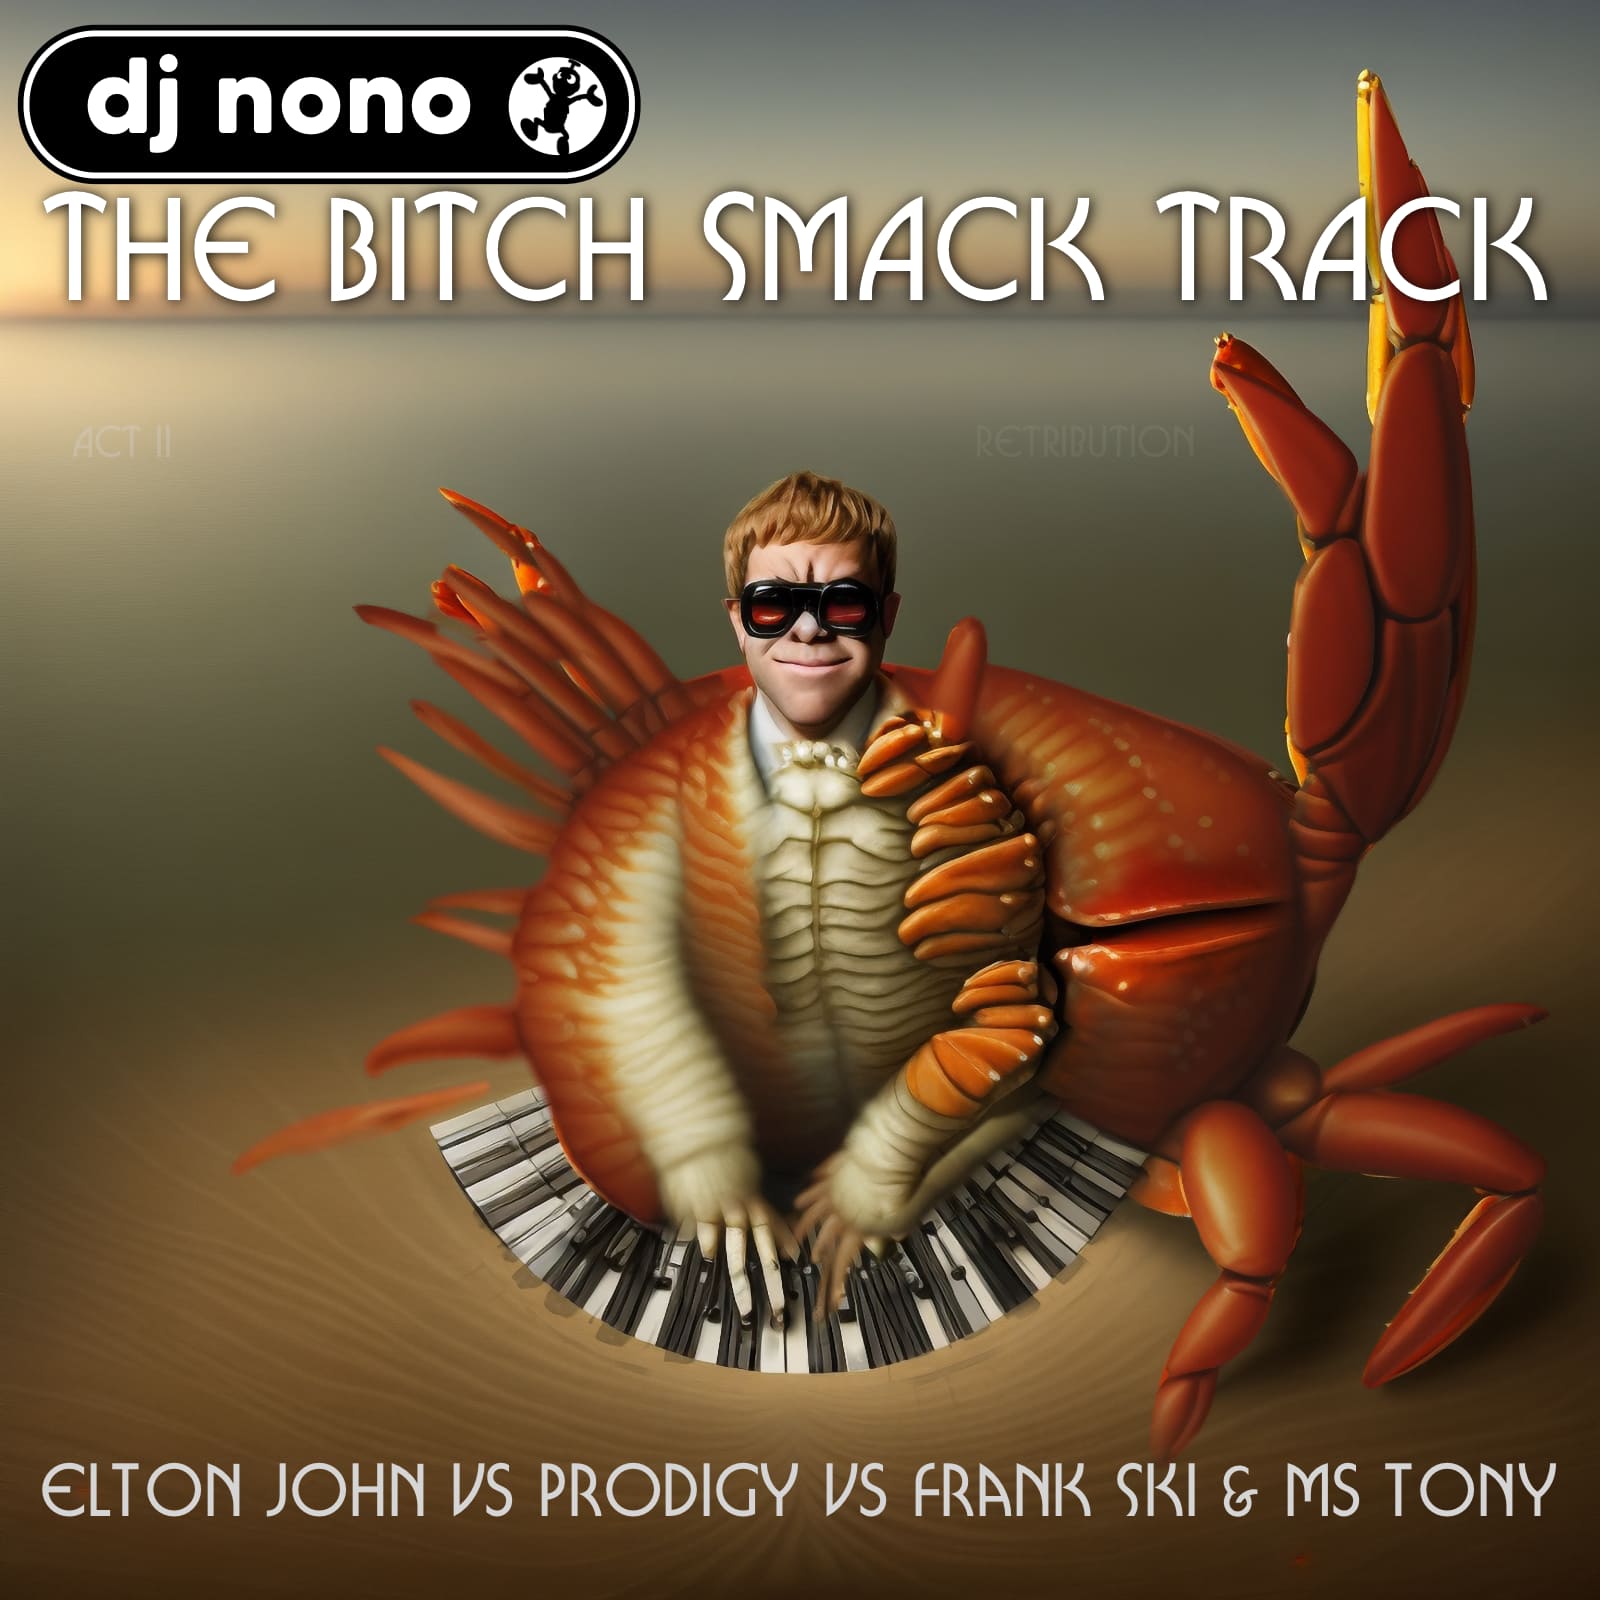 DJNoNo - The Bitch Smack Track (Elton John vs Prodigy vs Frank Ski & Ms Tony) mashup cover